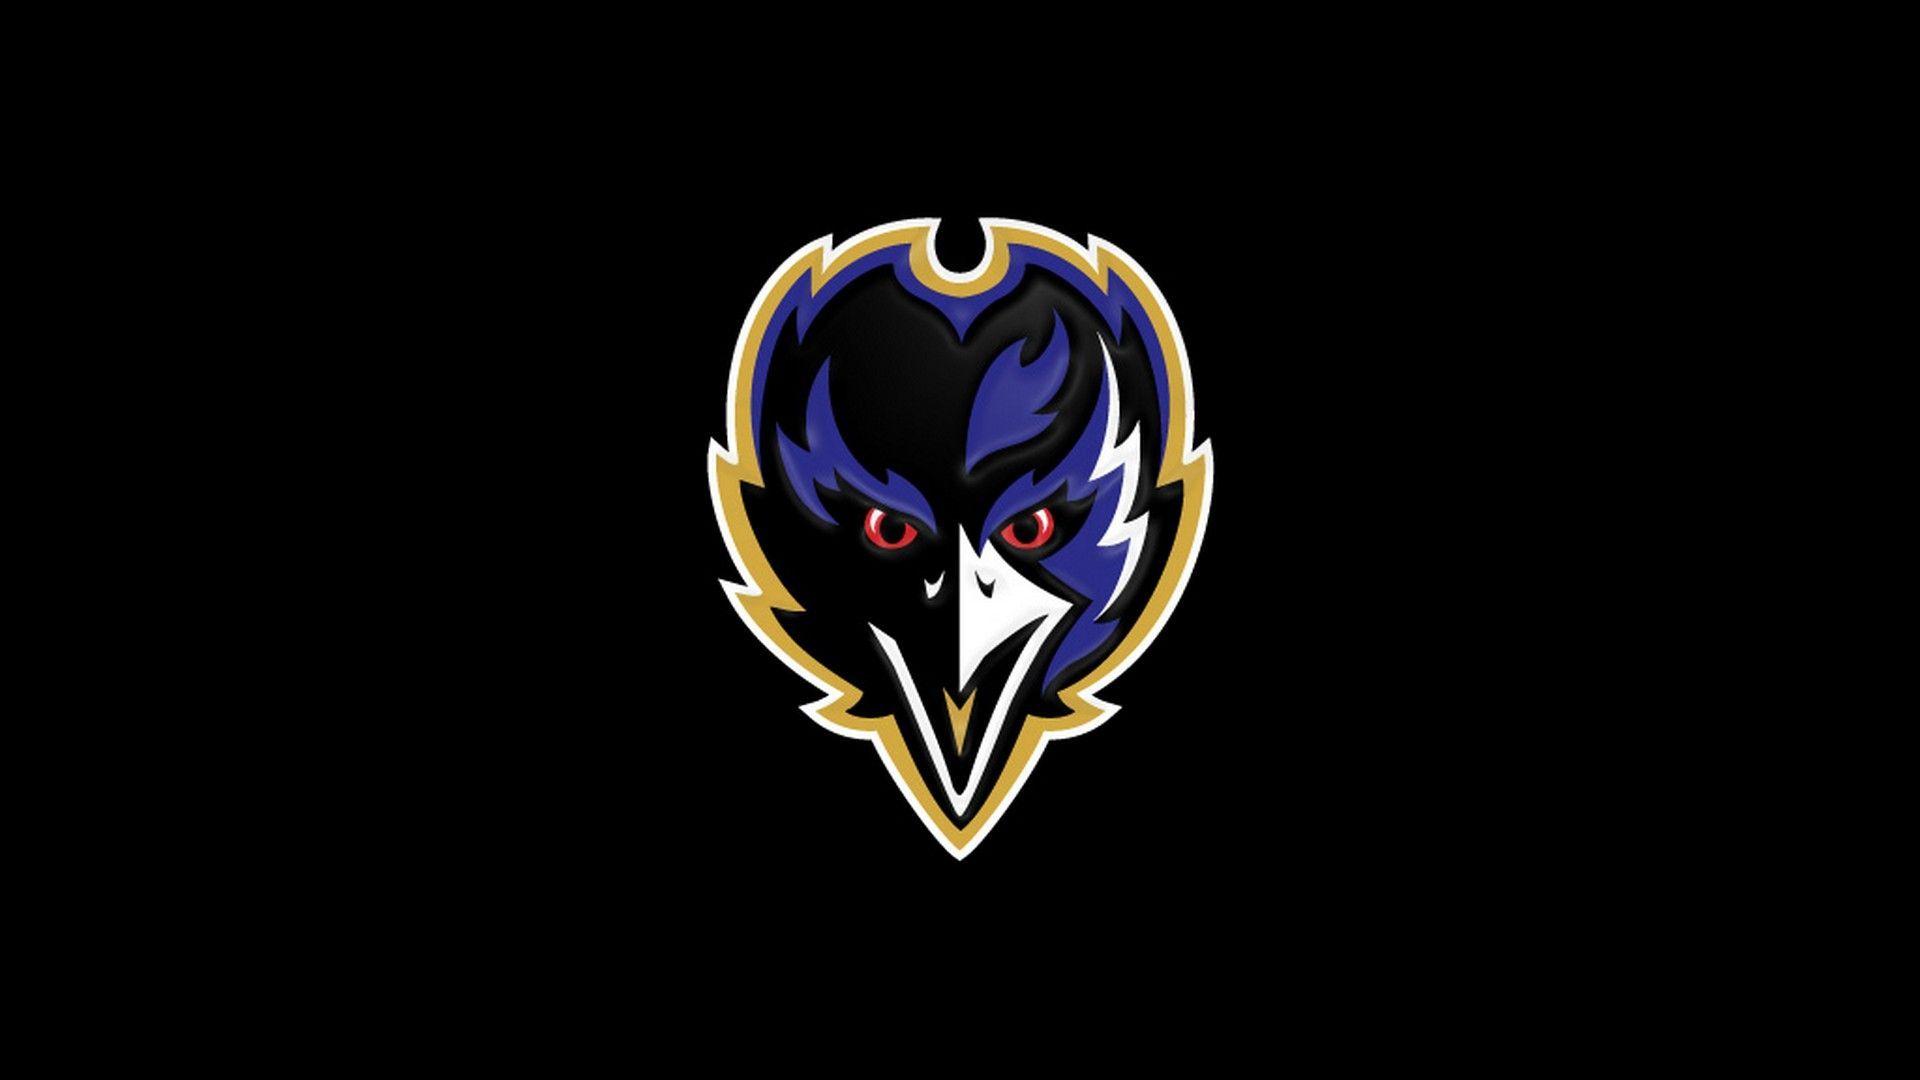 ravens logo wallpaper